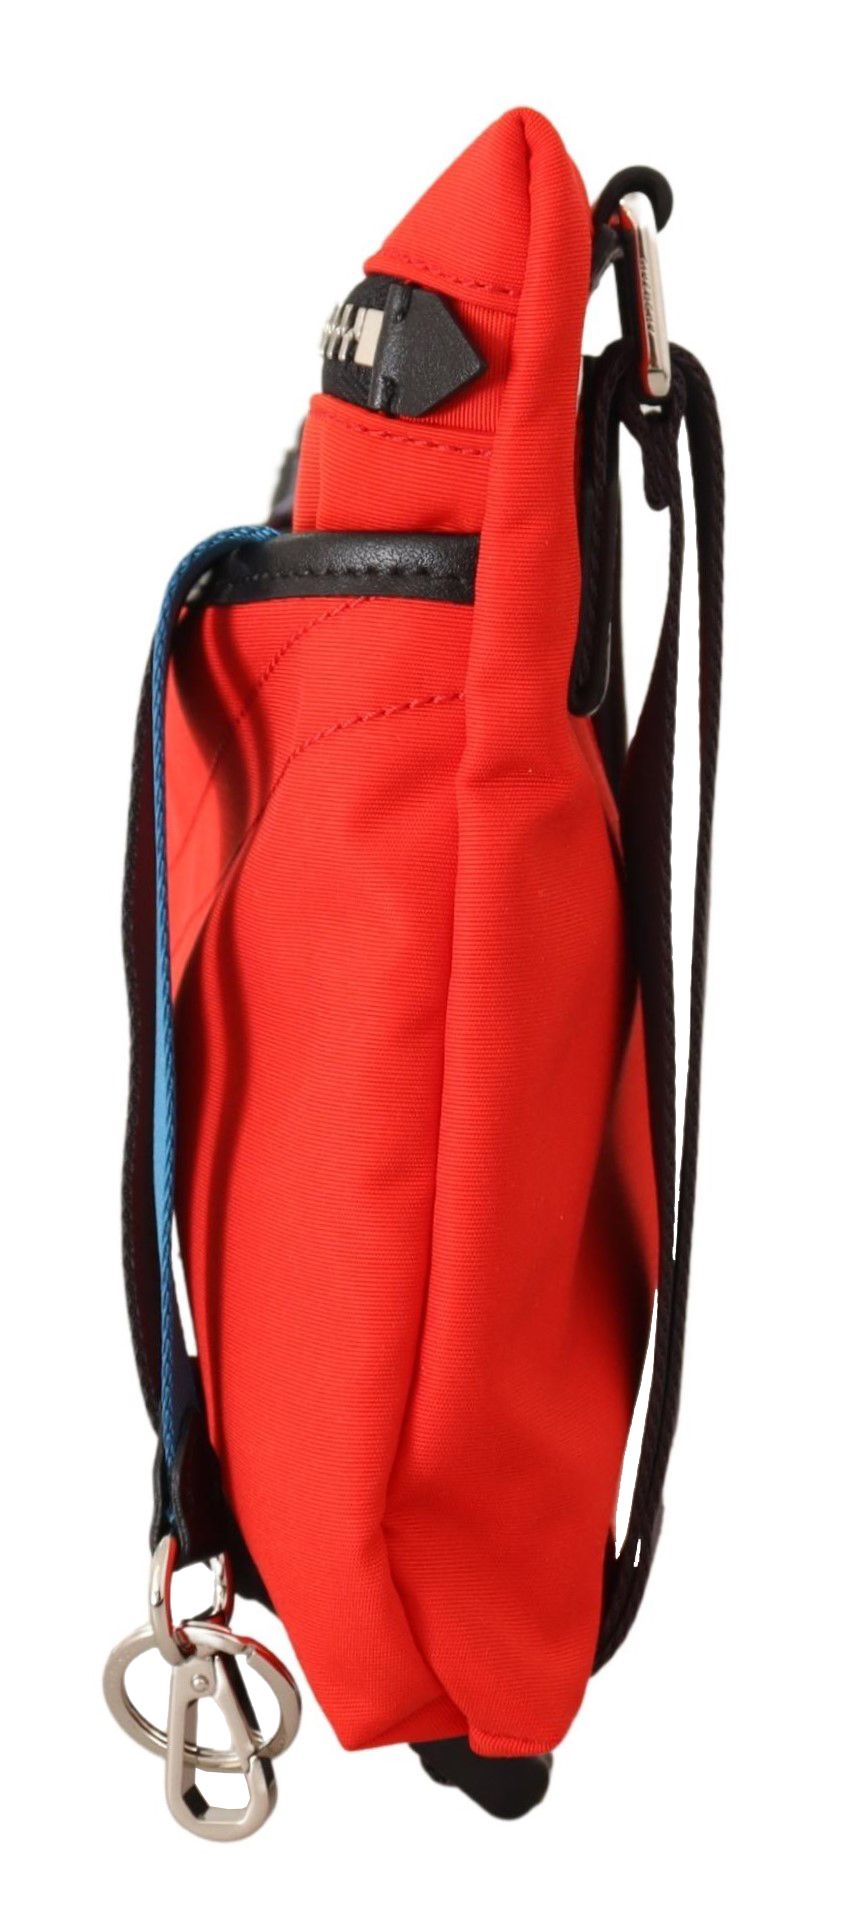 Givenchy Men's Red Polyamide Downtown Flat Crossbody Bag